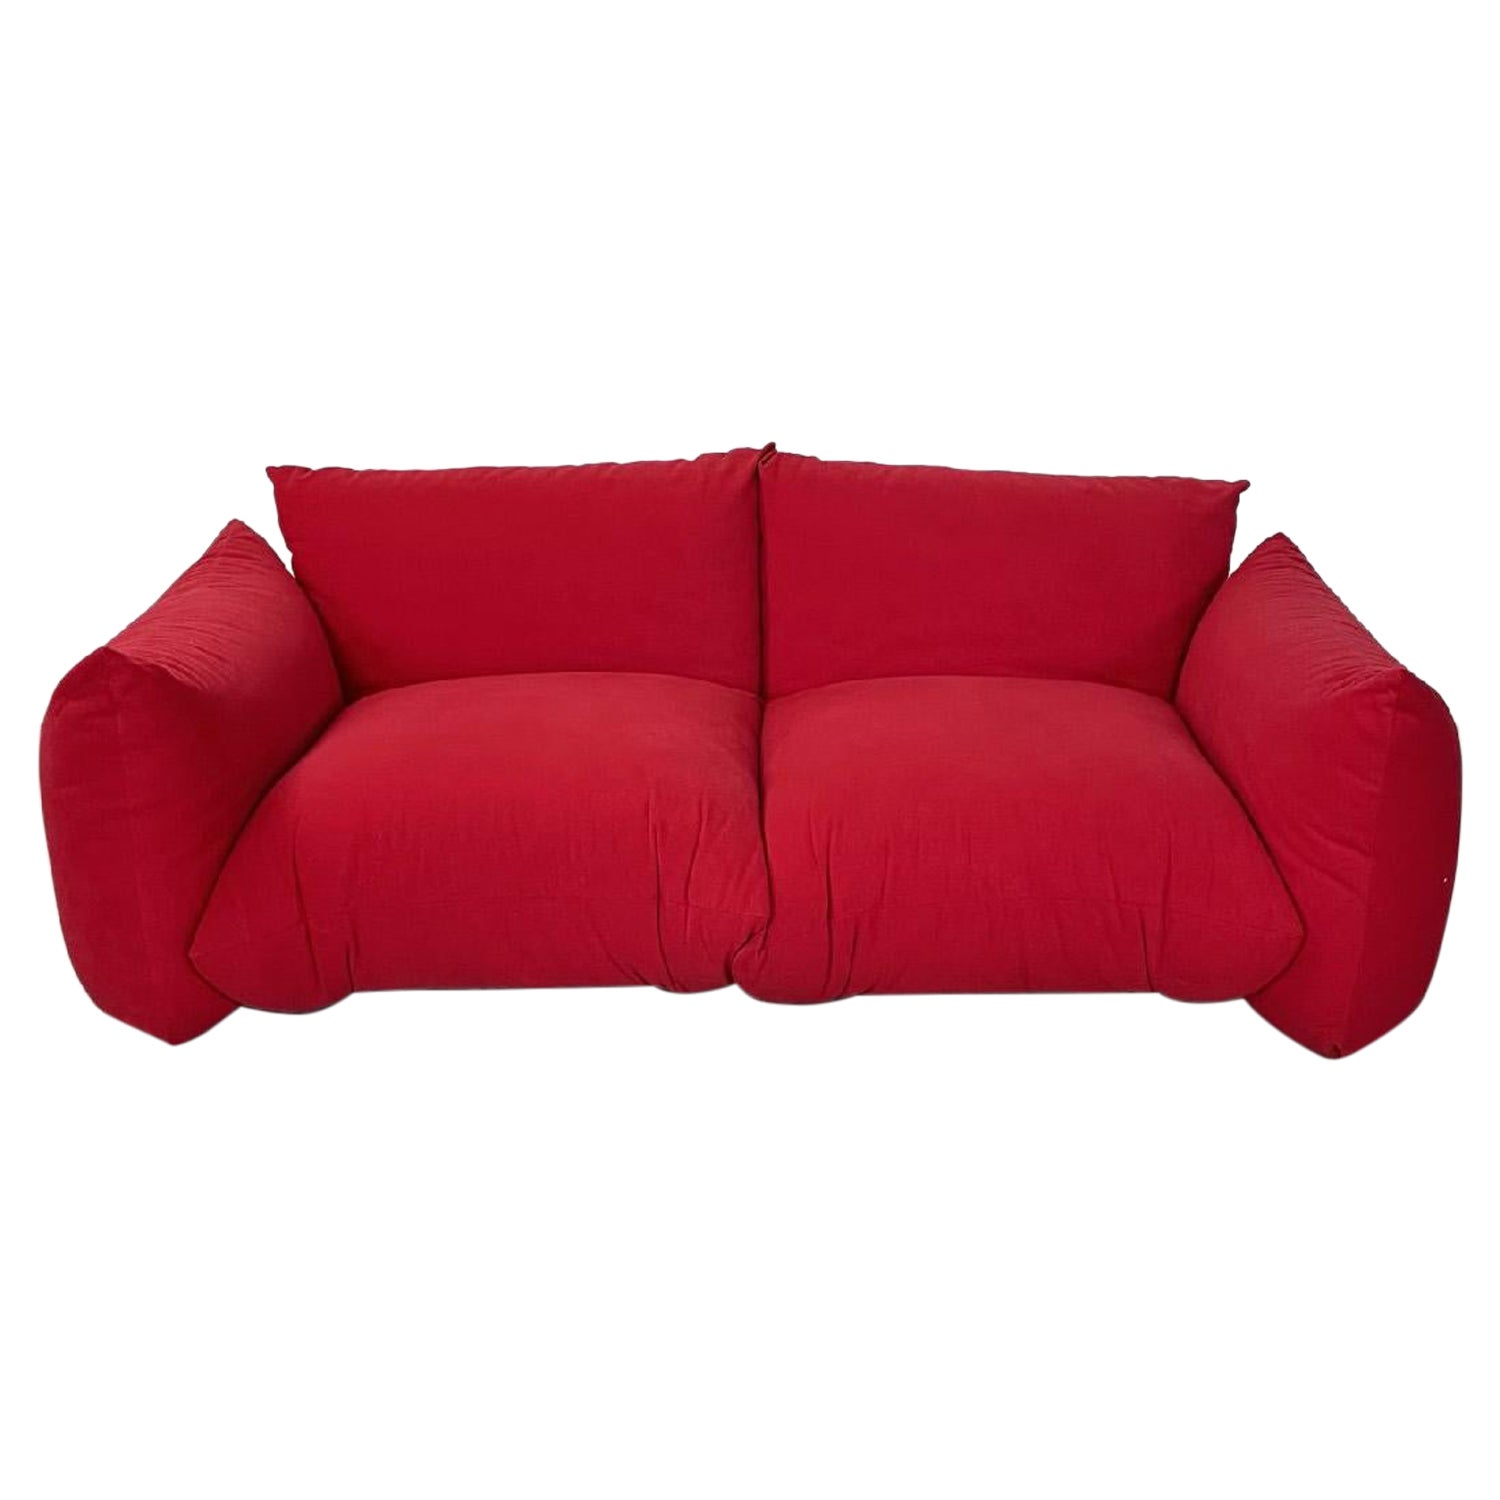 Italian modern red sofa Marenco by Mario Marenco for Arflex, 1970s For Sale